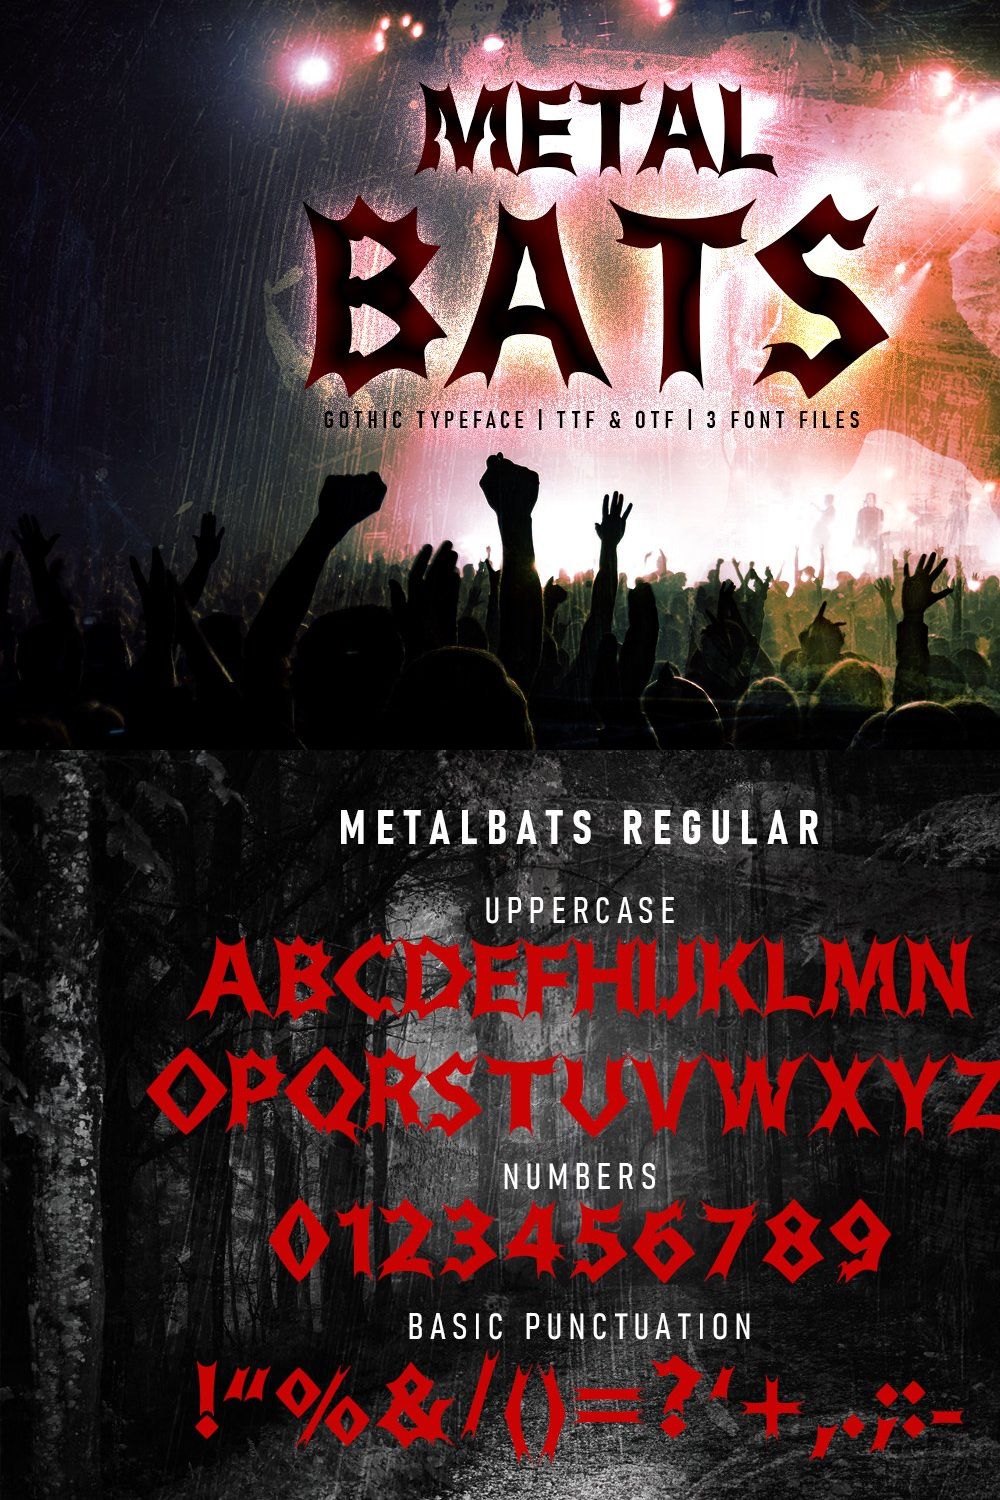 Metal Bats pinterest preview image.